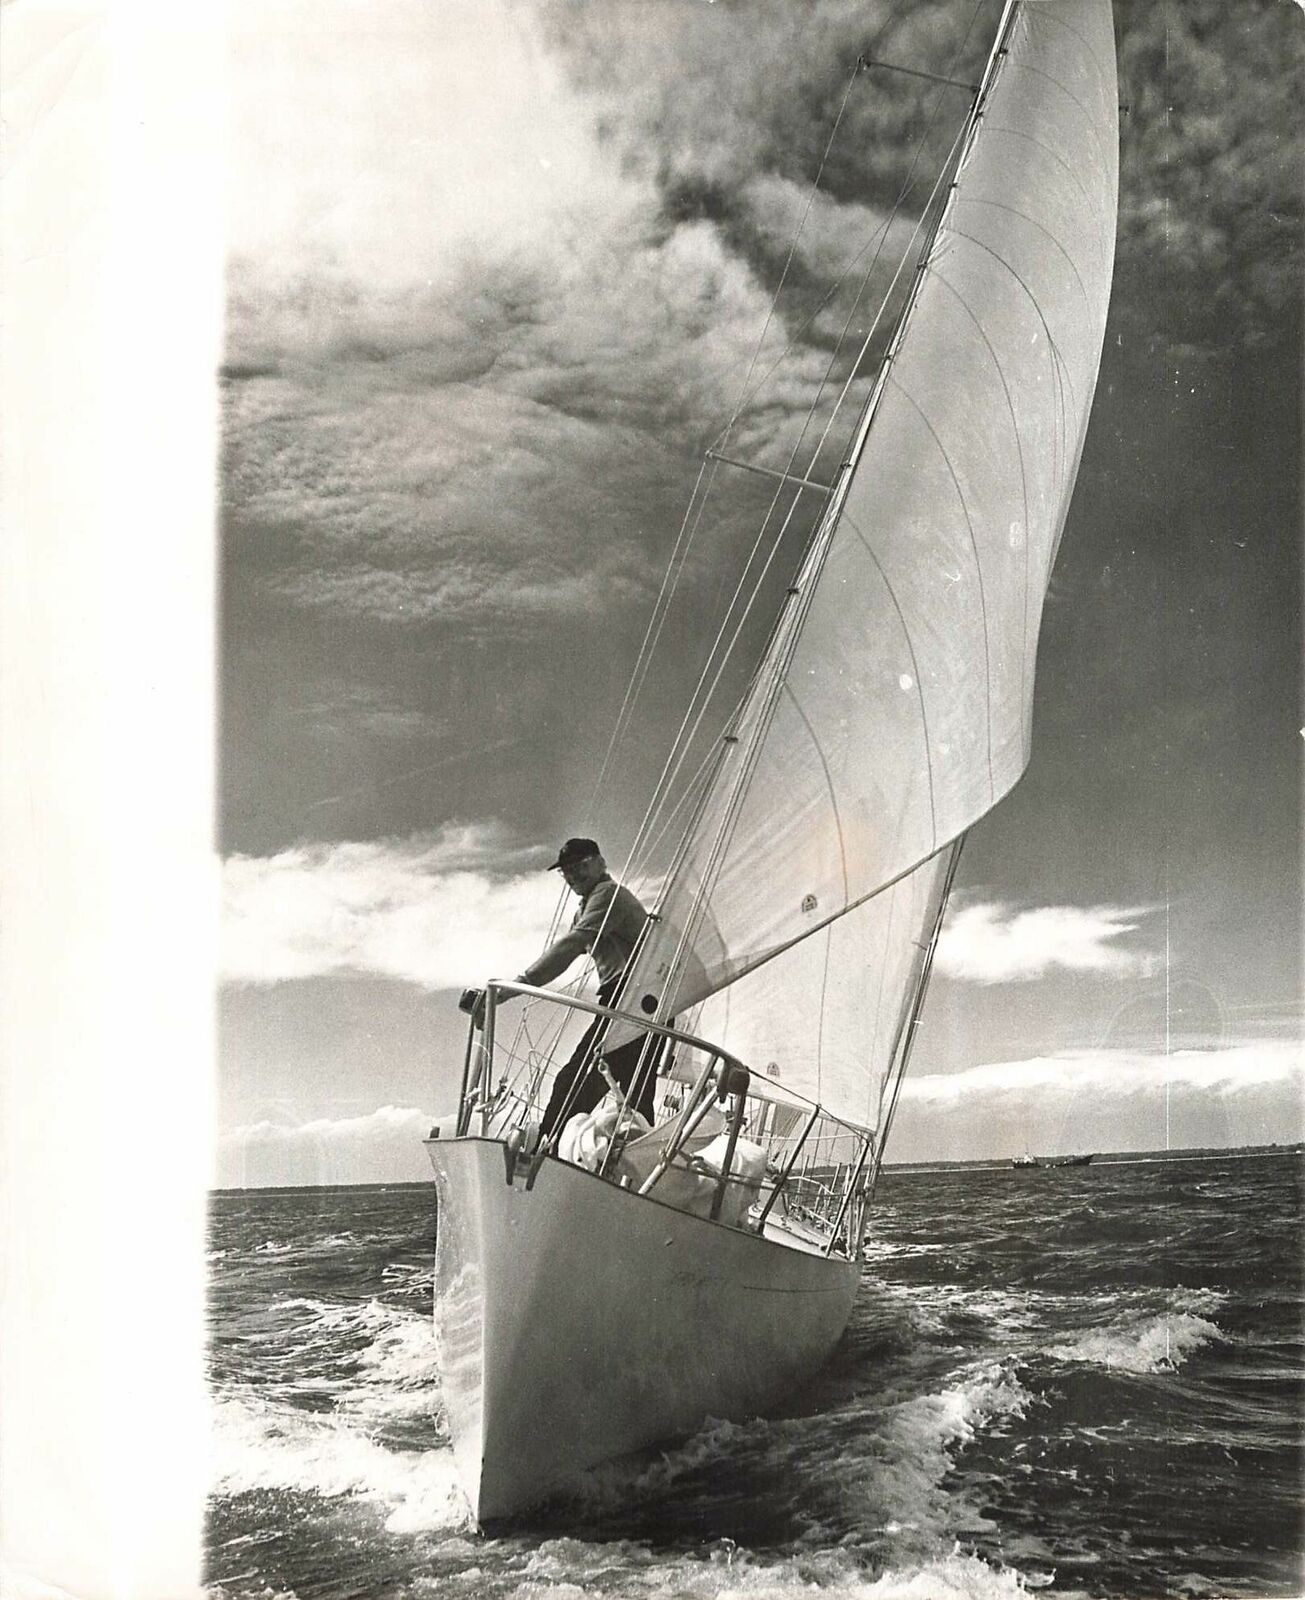 1966 Press Photo FRANCIS CHICHESTER, GYPSY MOTH IV trials for Australian voyage